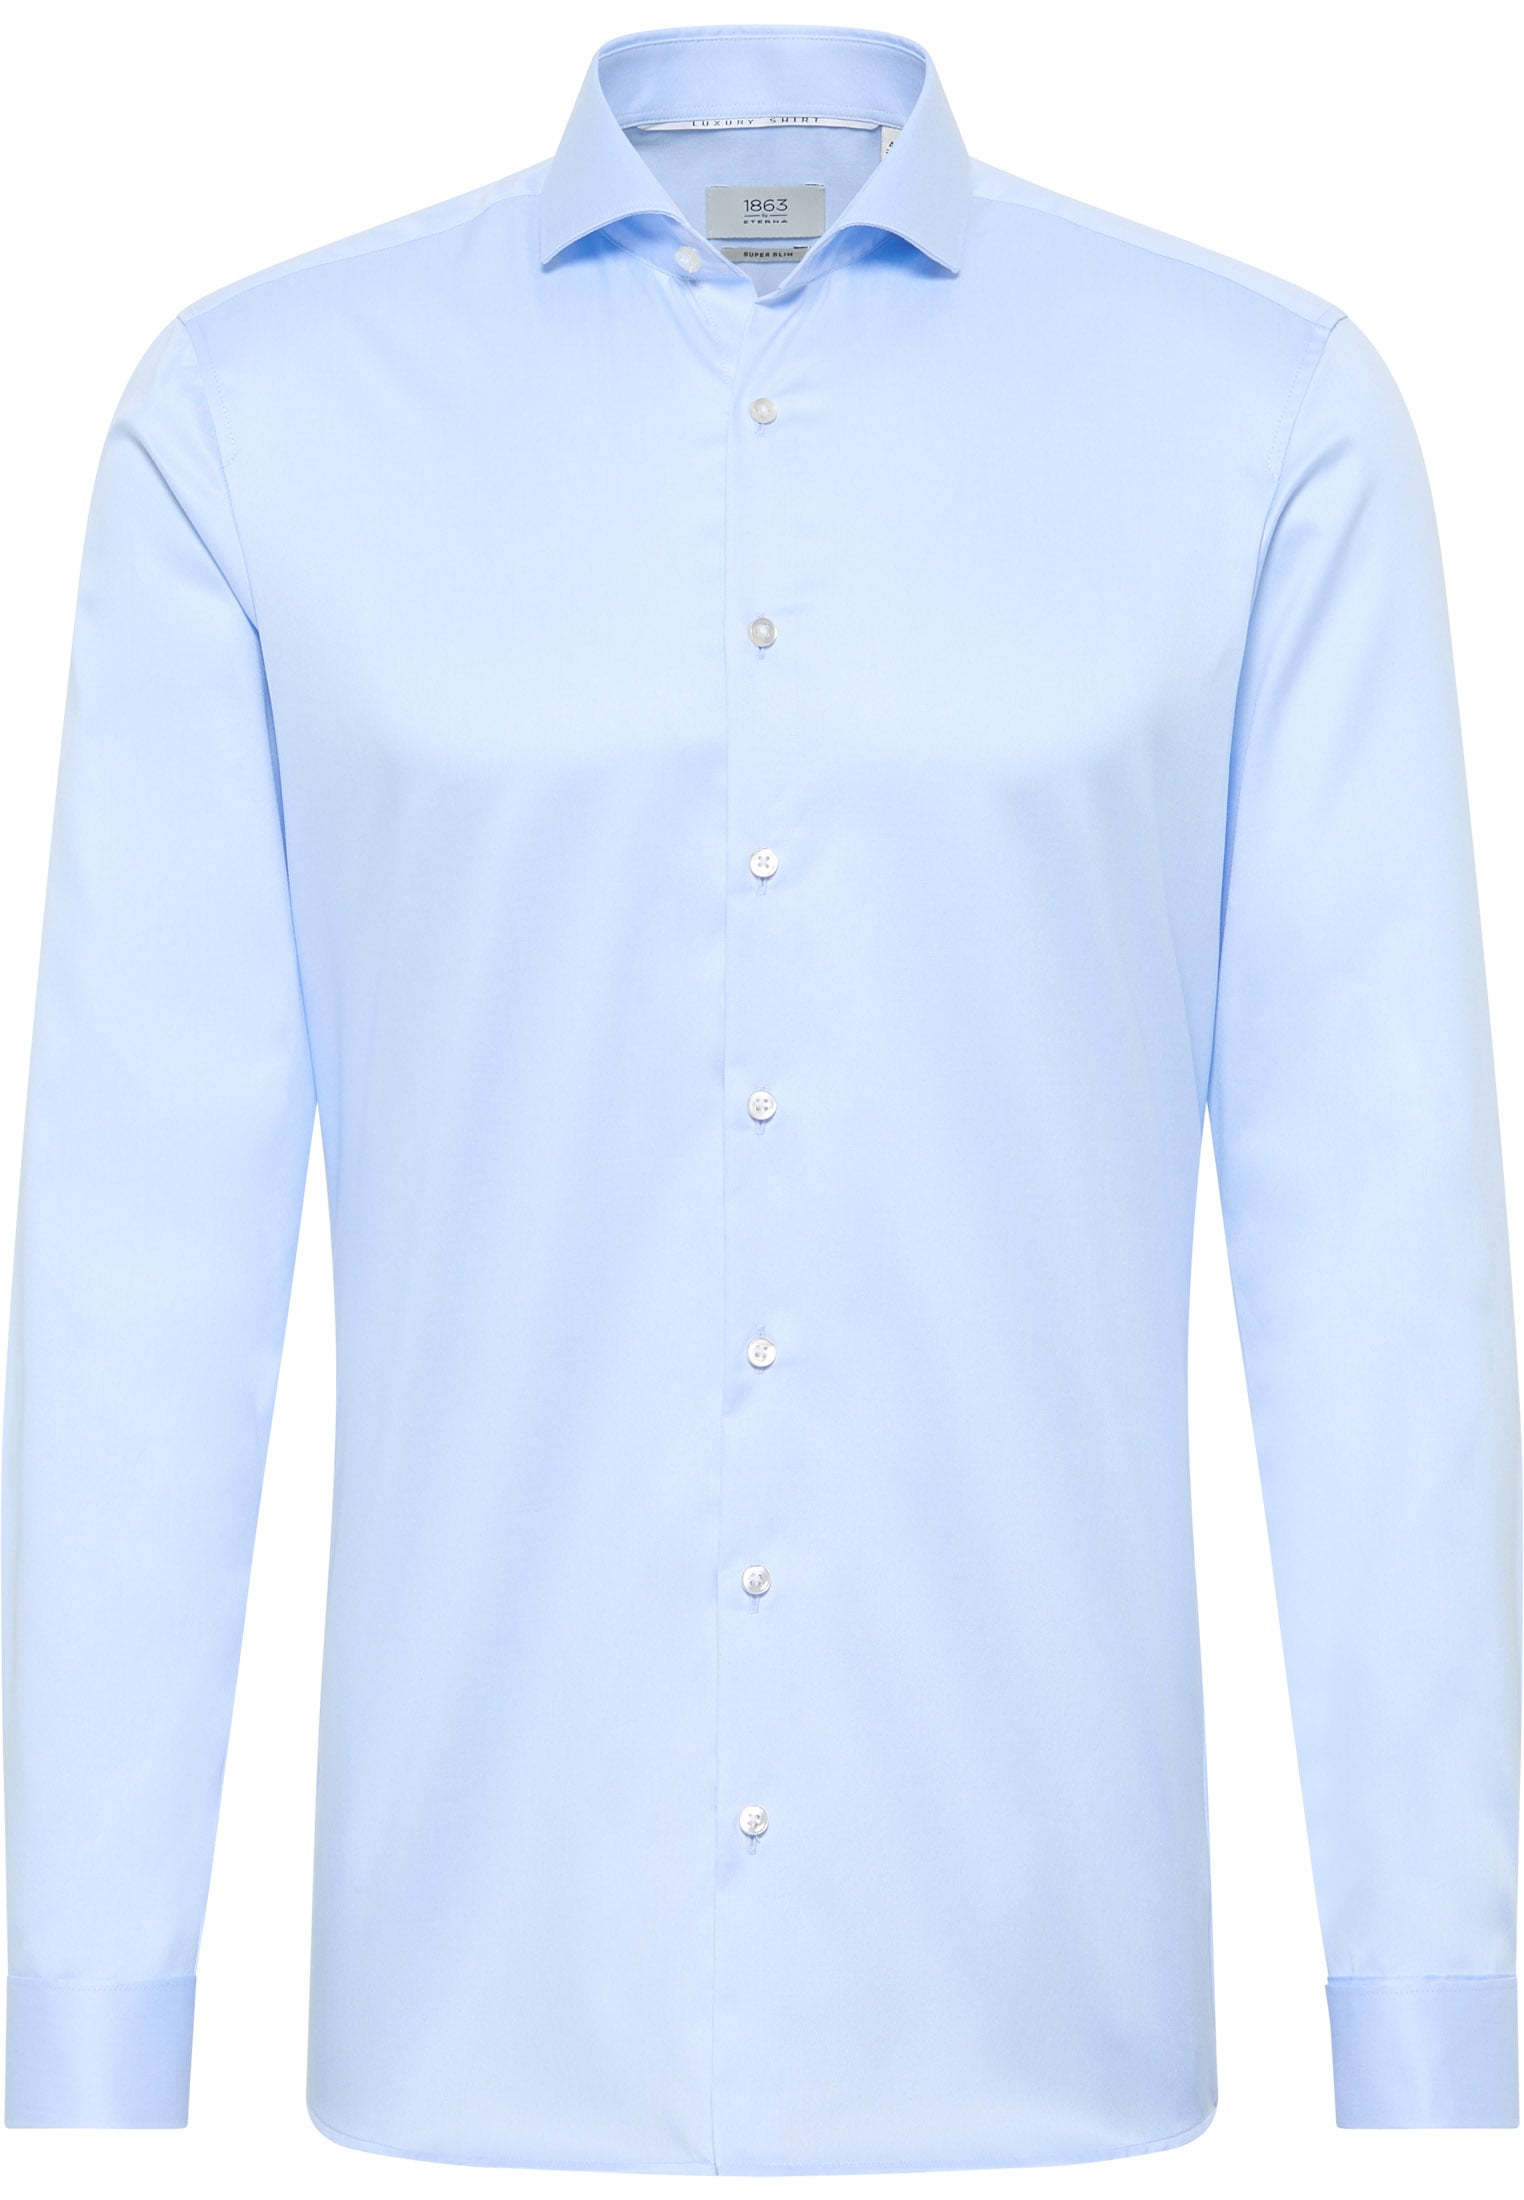 SUPER SLIM Luxury Shirt bleu clair uni